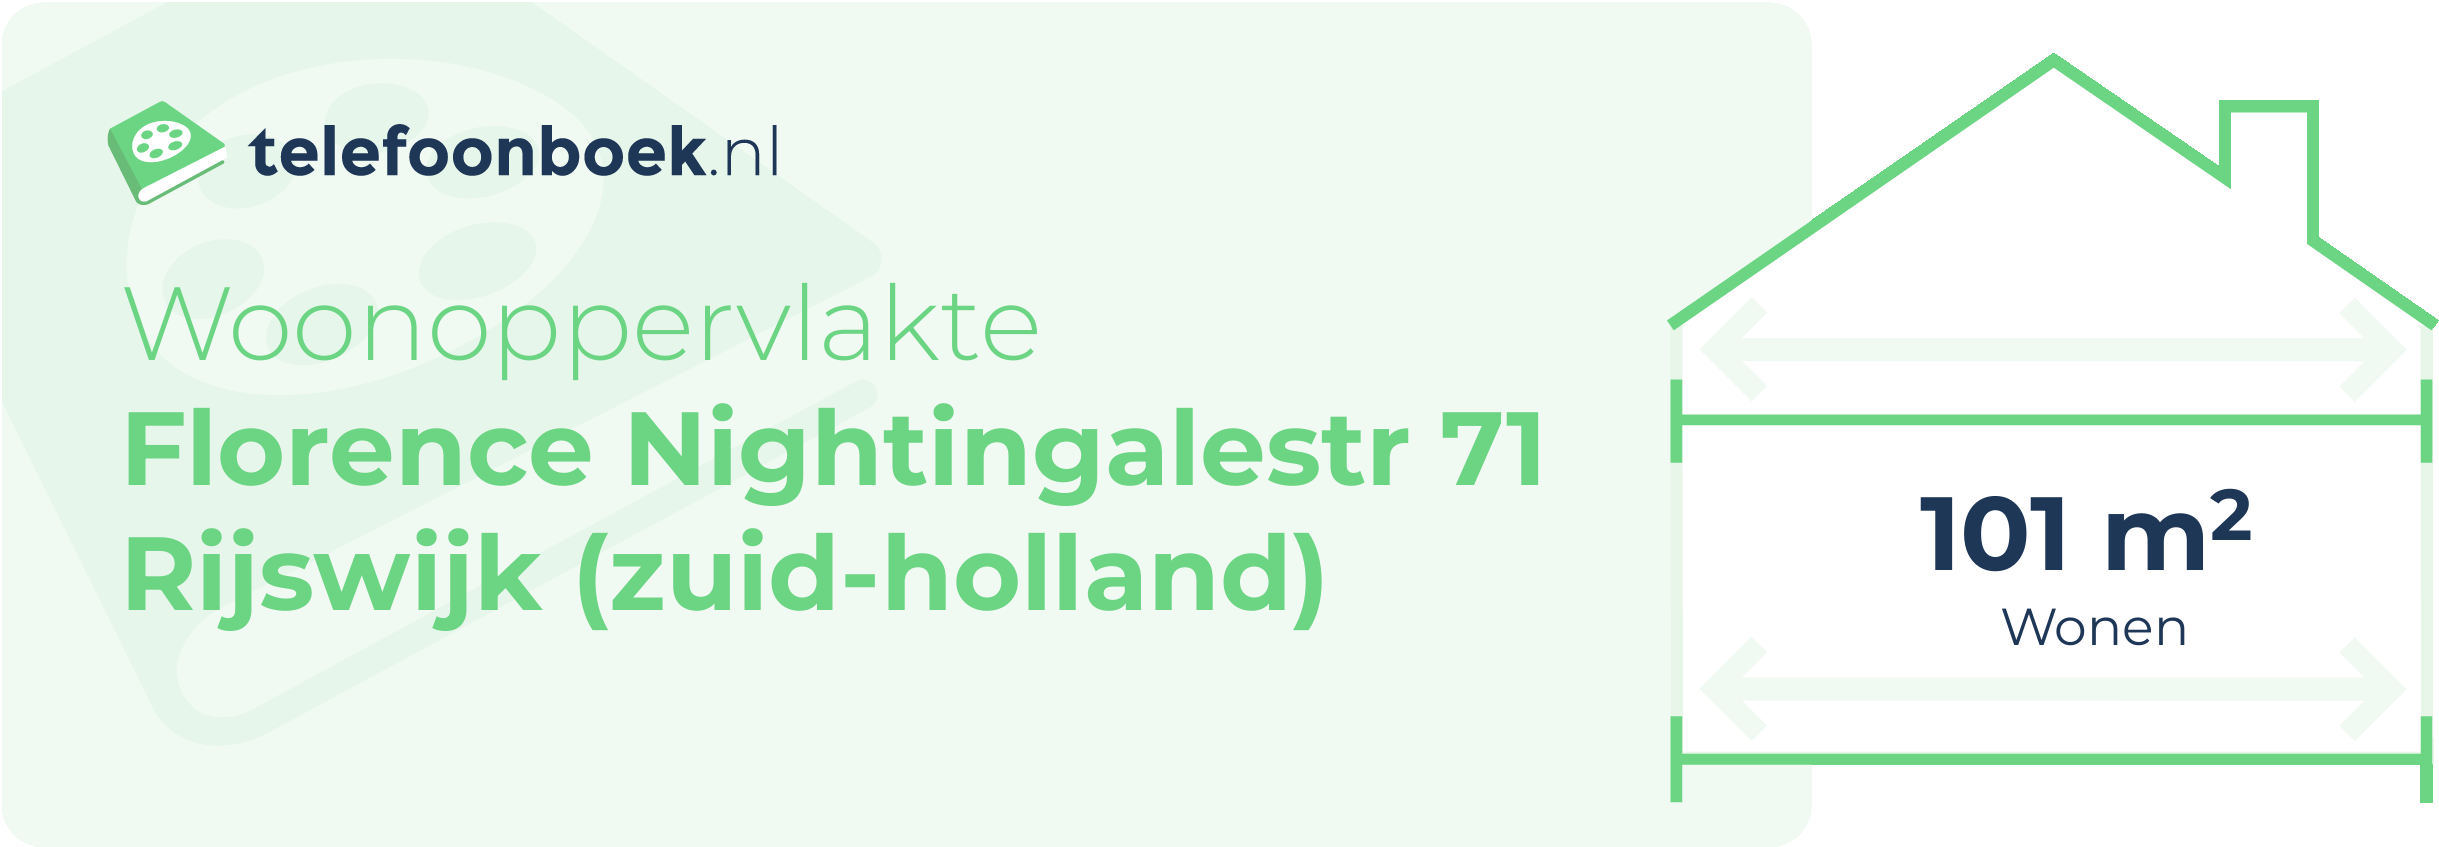 Woonoppervlakte Florence Nightingalestr 71 Rijswijk (Zuid-Holland)